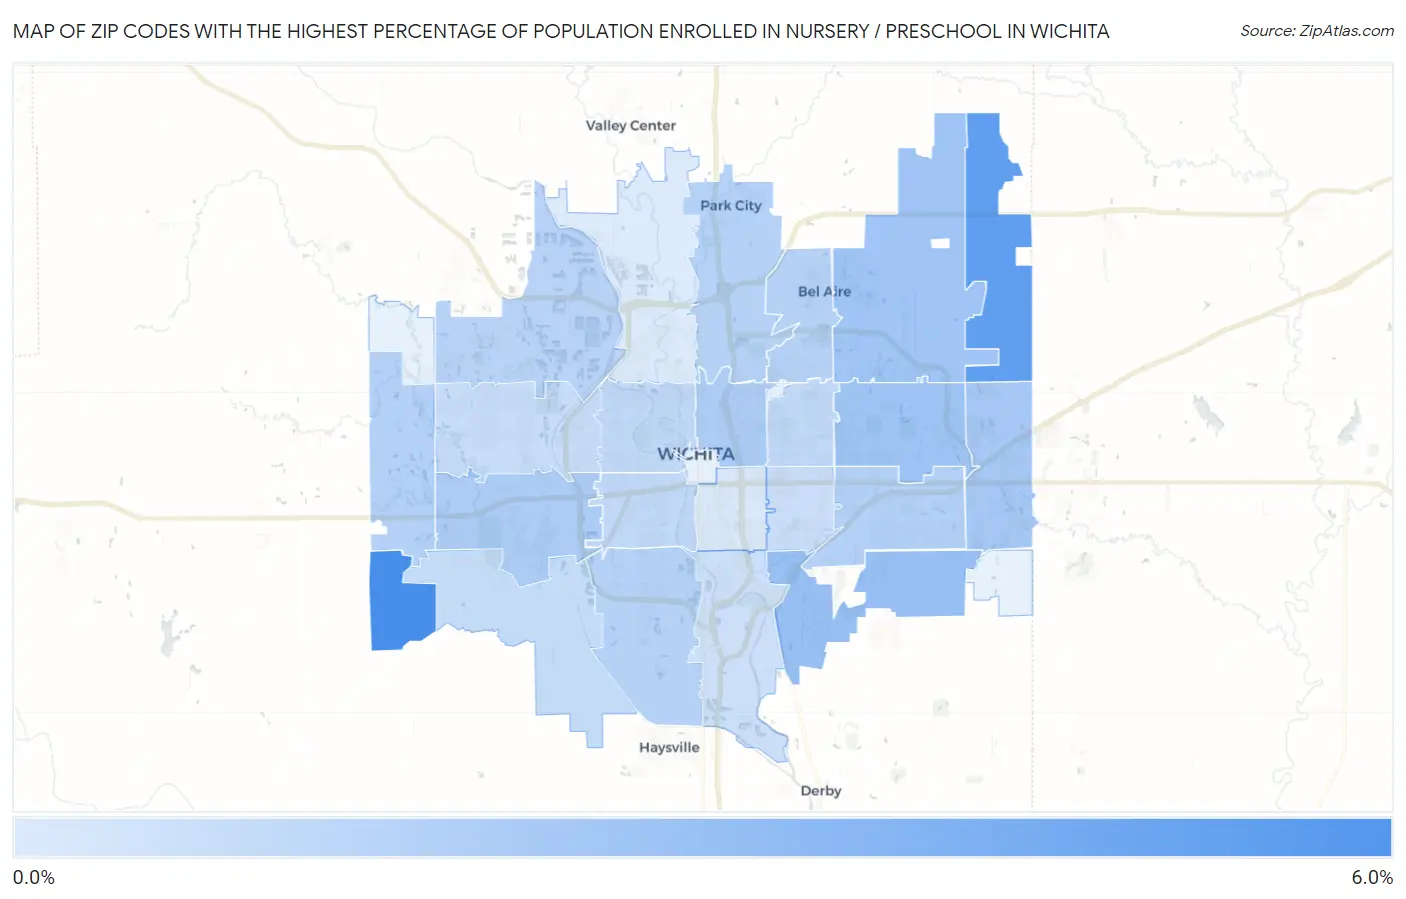 Zip Codes with the Highest Percentage of Population Enrolled in Nursery / Preschool in Wichita Map